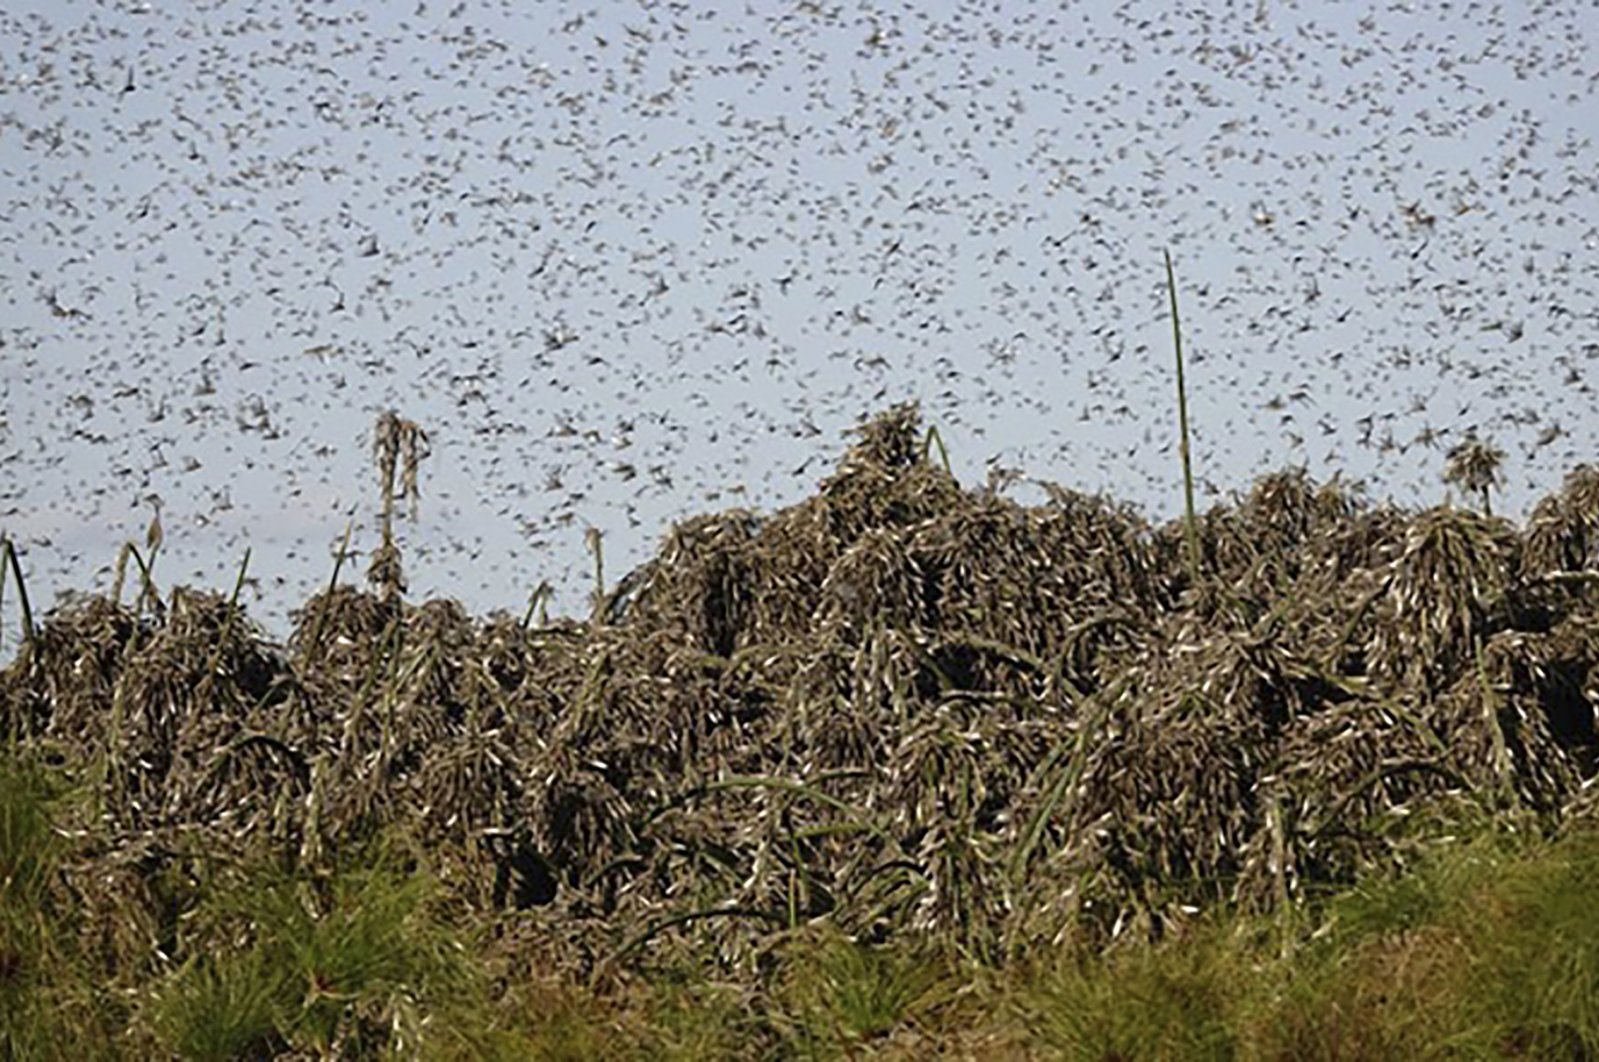 Locusts swarm is seen near Gaborone, Botswana, Sept. 4, 2020. (AP Photo)